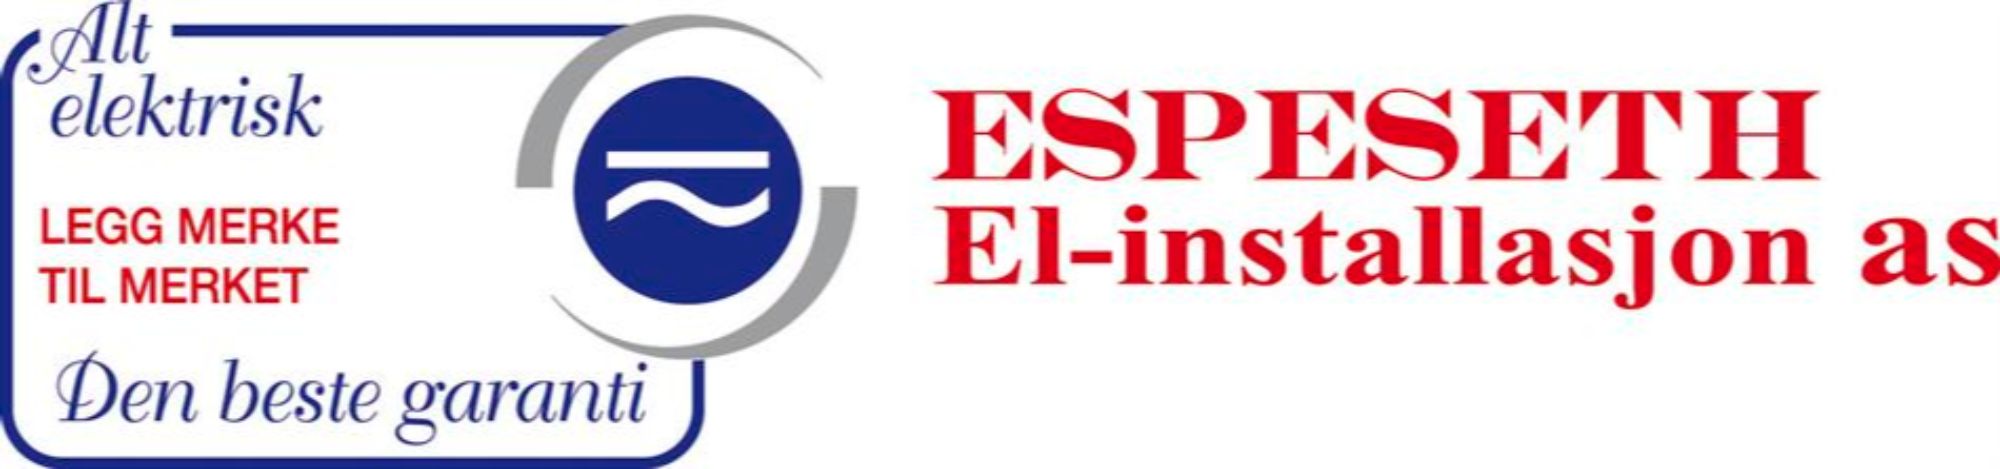 Espeseth El-Installasjon AS logo